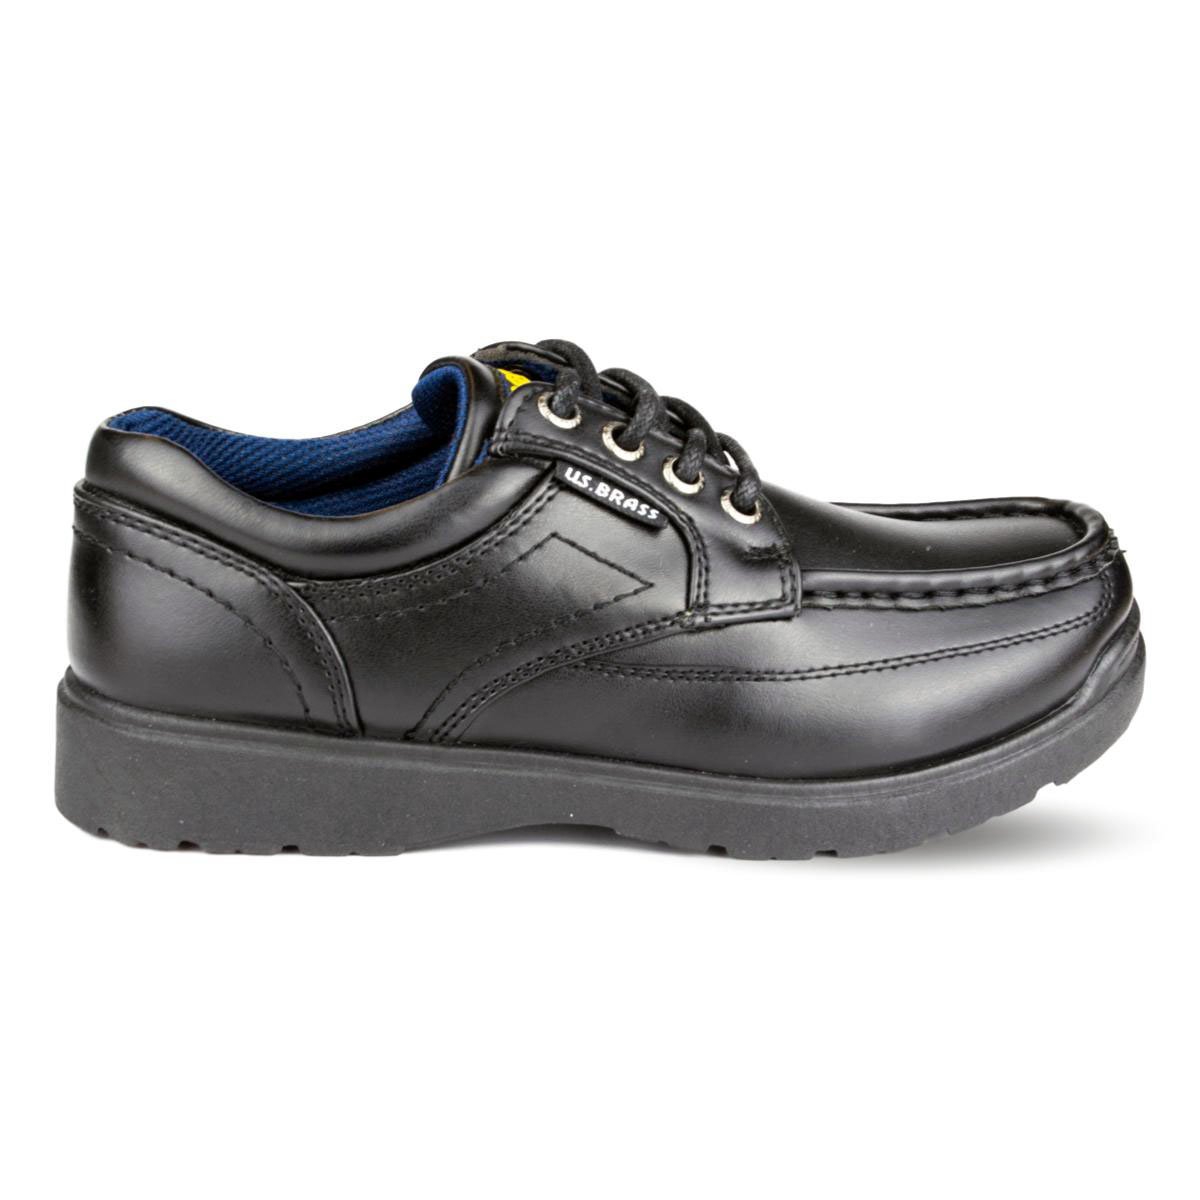 Boys Black Lace Up School Shoe - Watney Shoes 